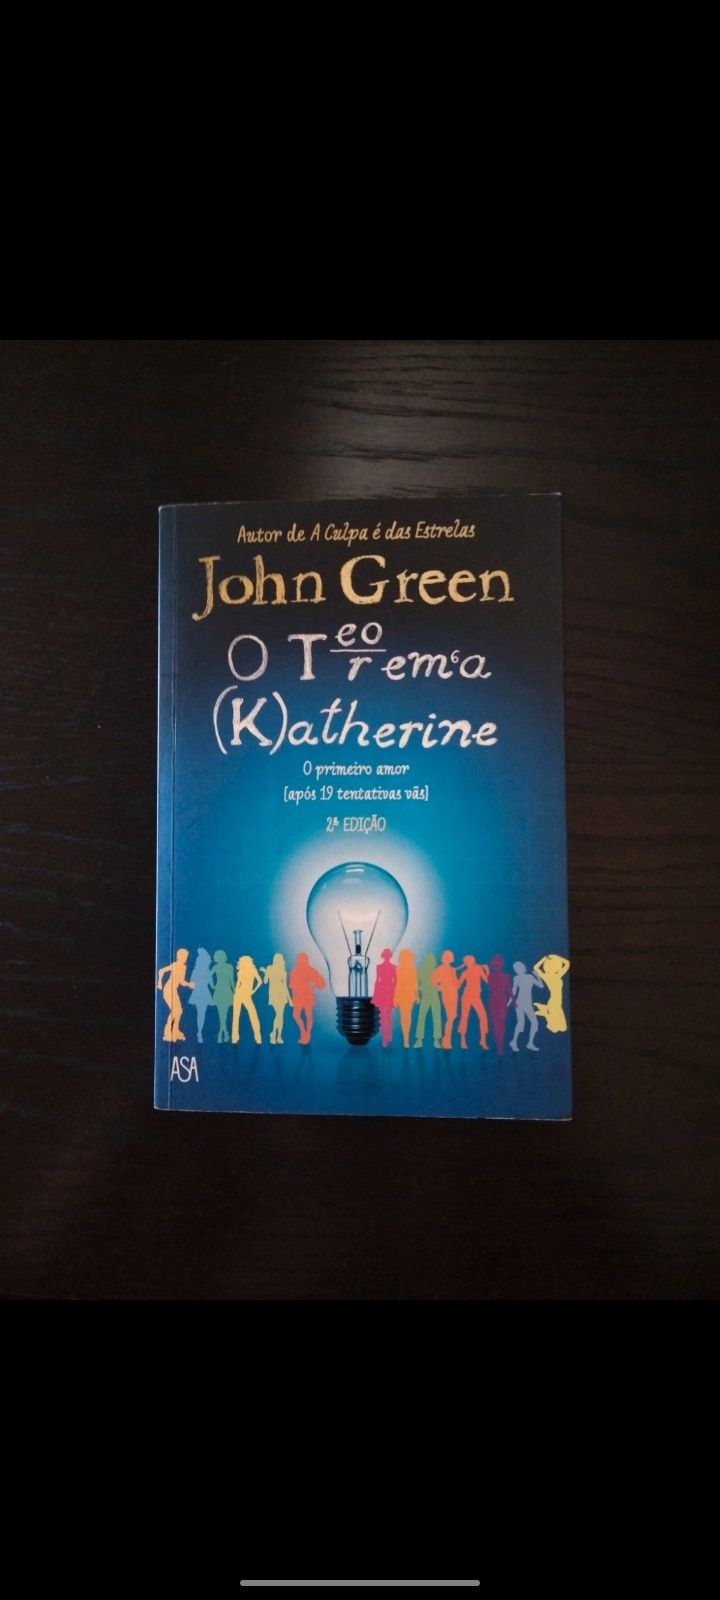 Livro "O Teorema de Katherine", John Green